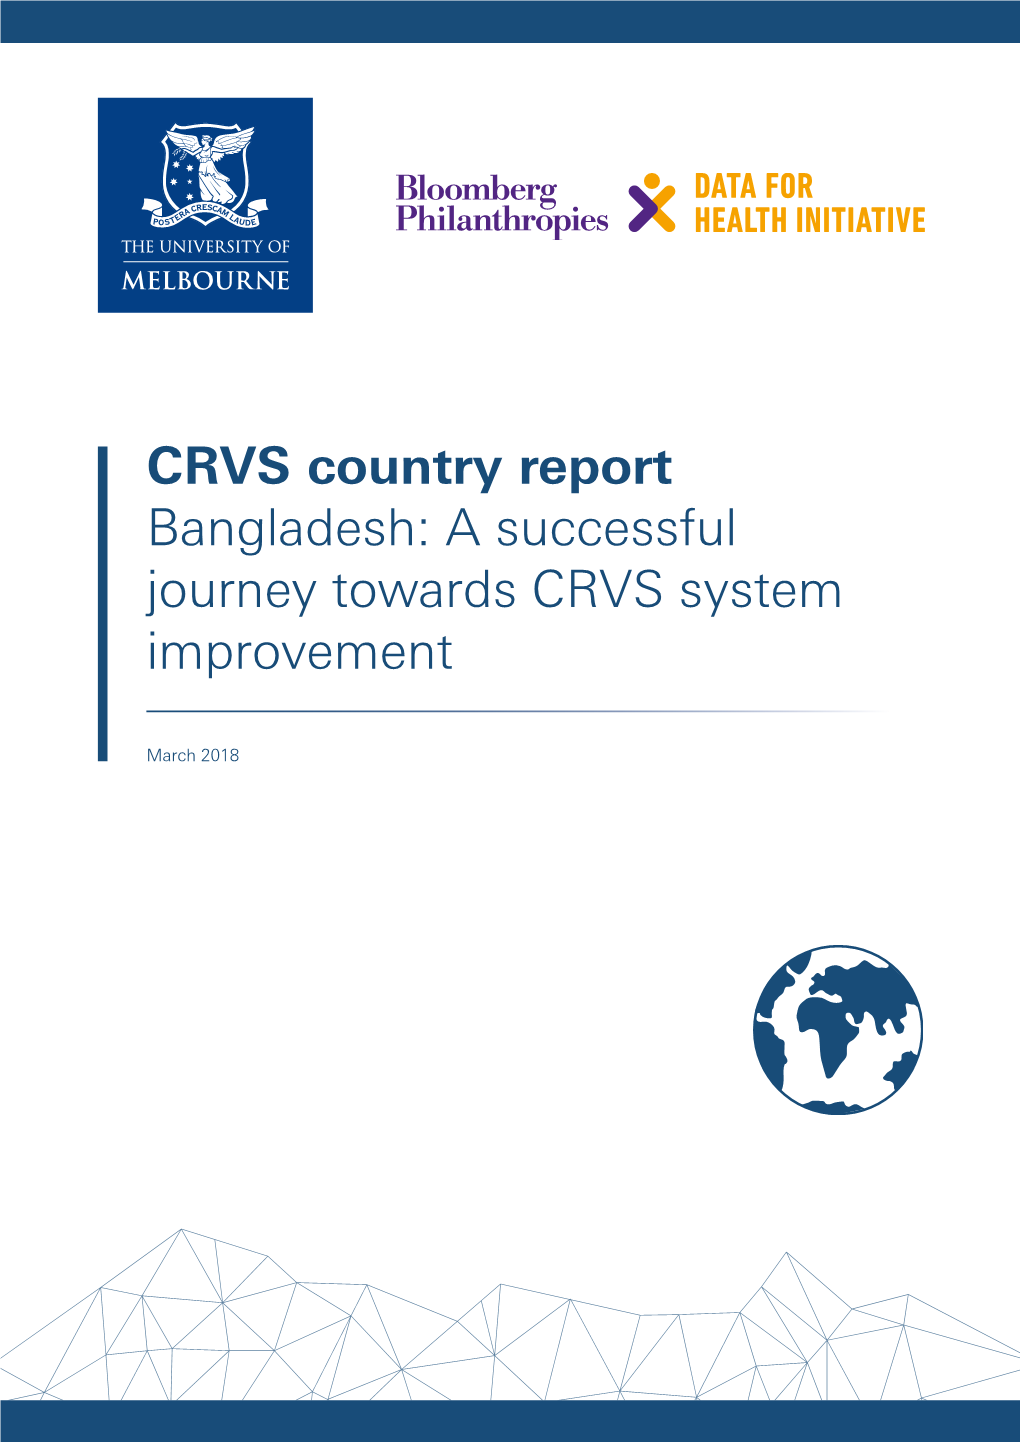 Civil Registration and Vital Statistics in Bangladesh